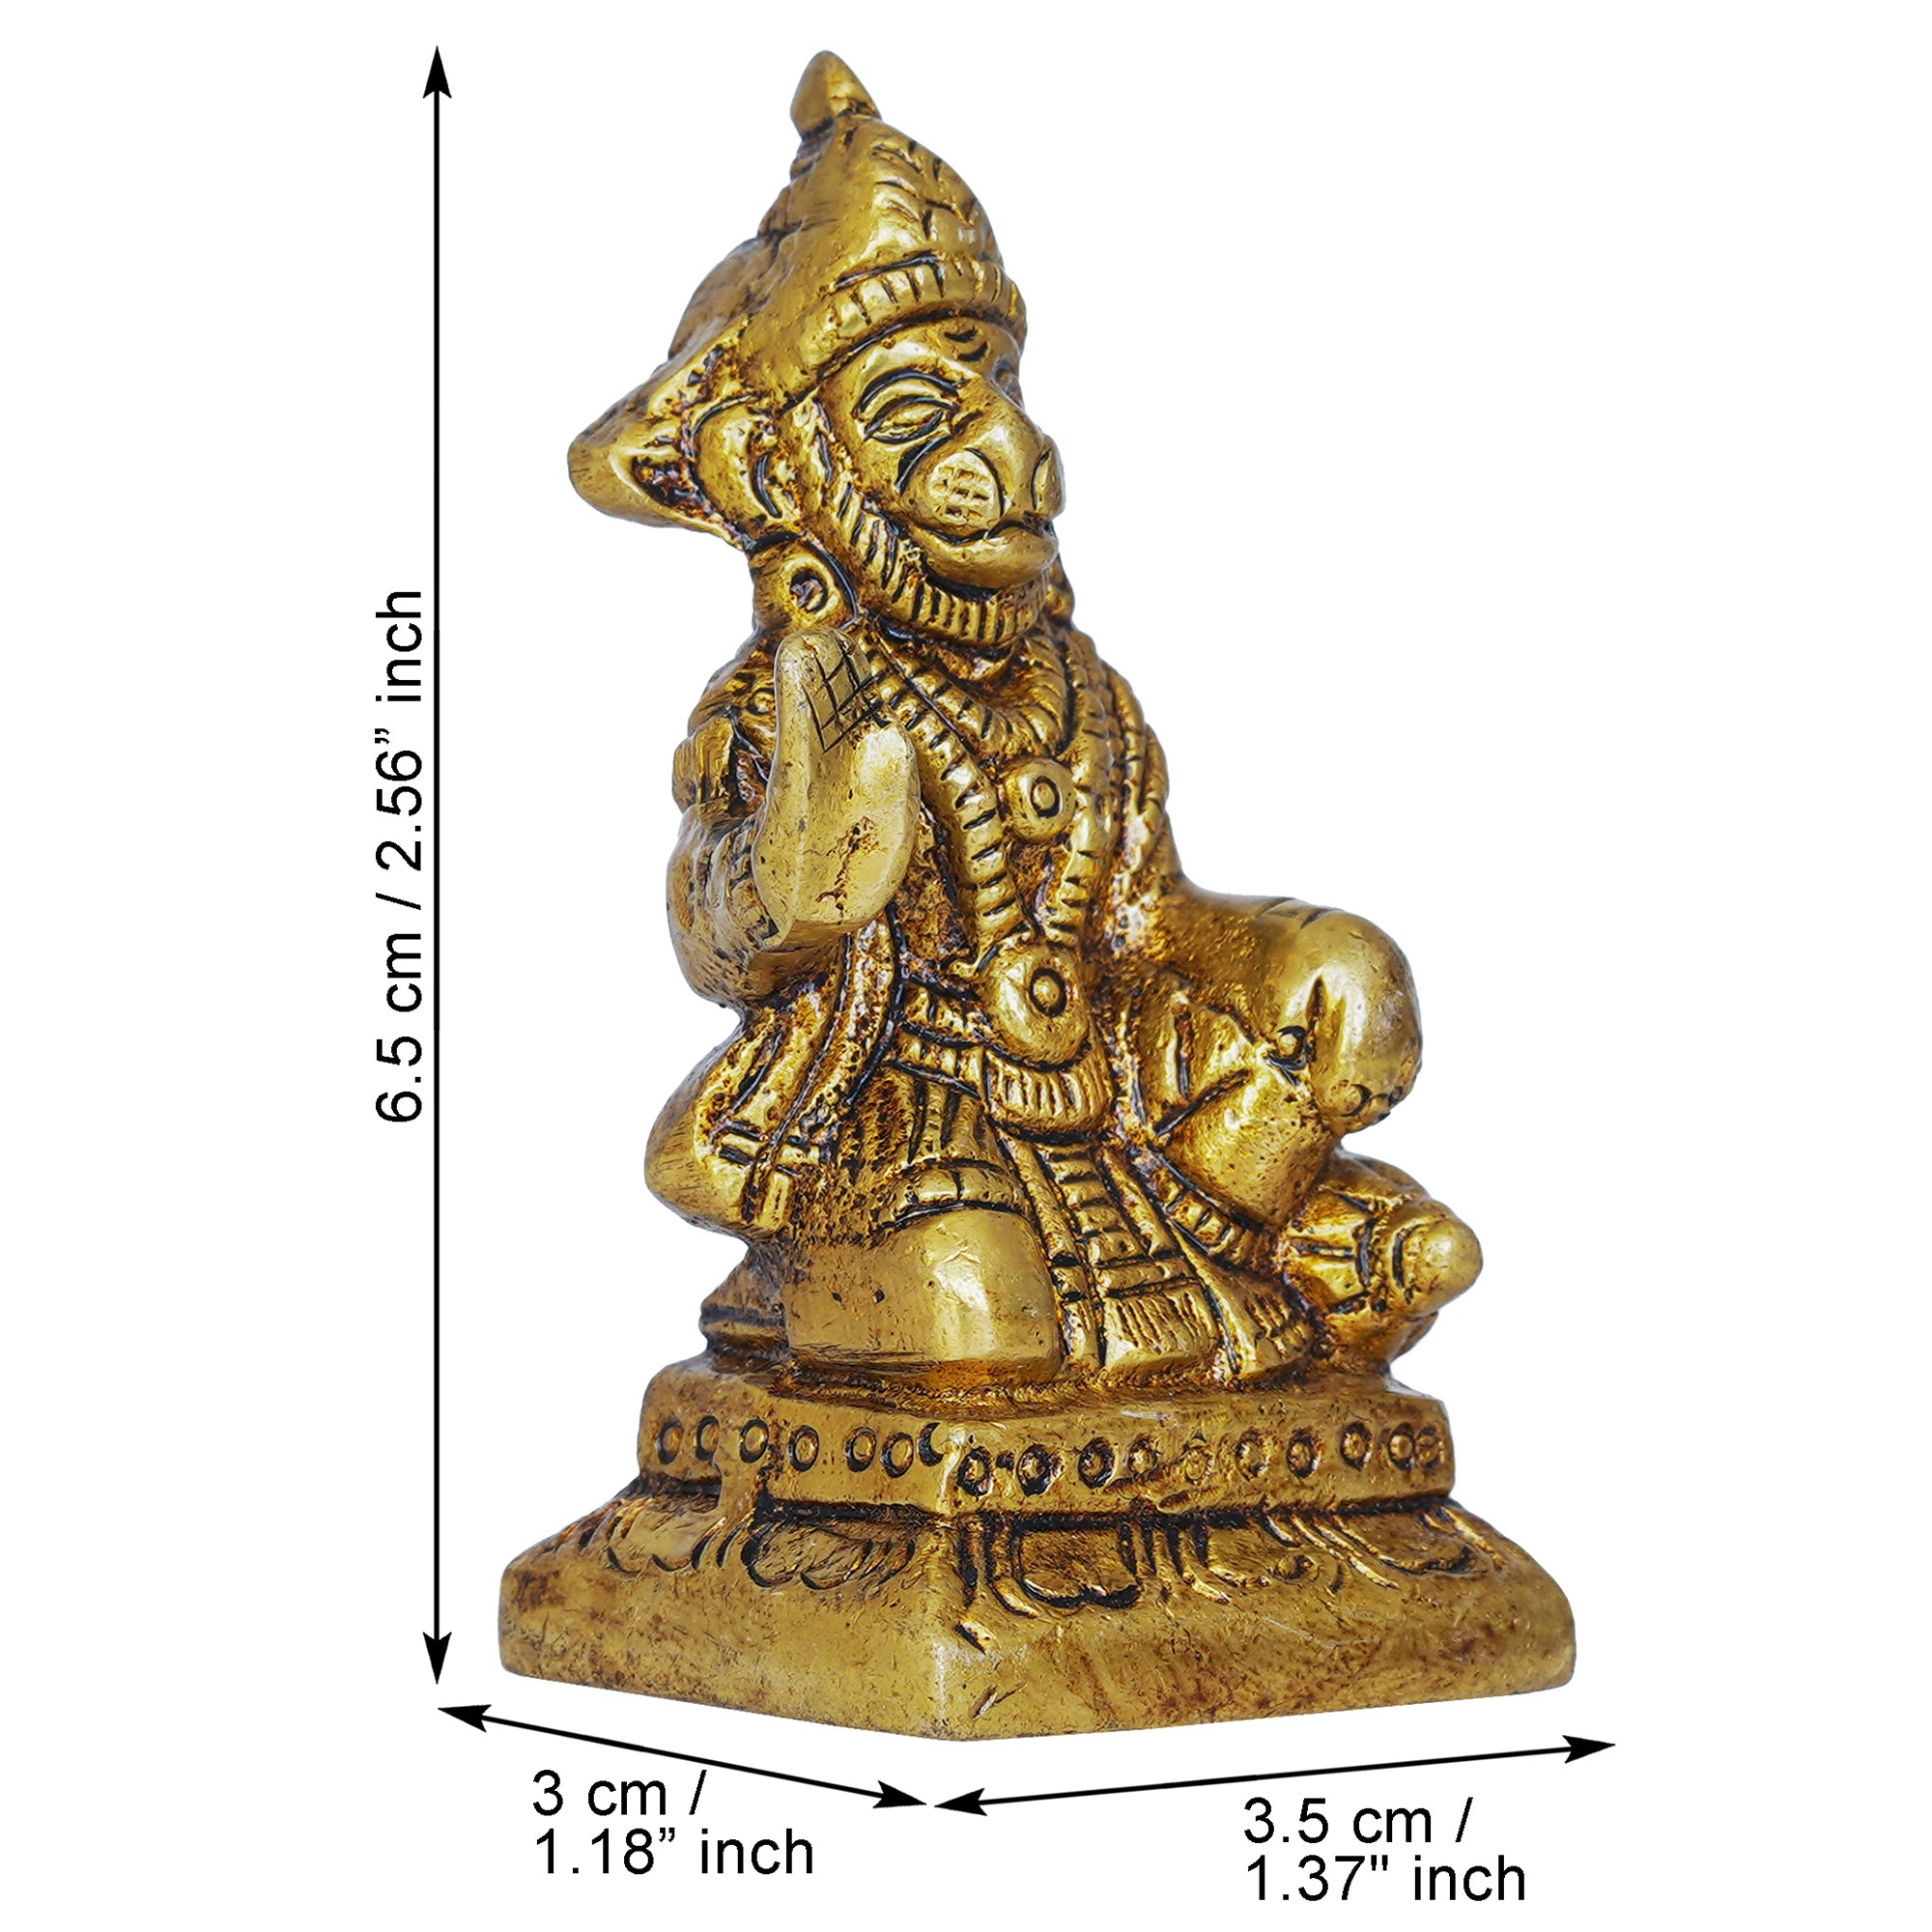 Golden Brass Blessing Lord Hanuman Statue Murti - Hindu God Idol for Home, Office, Temple Mandir - Hanuman Jayanti Gift 3